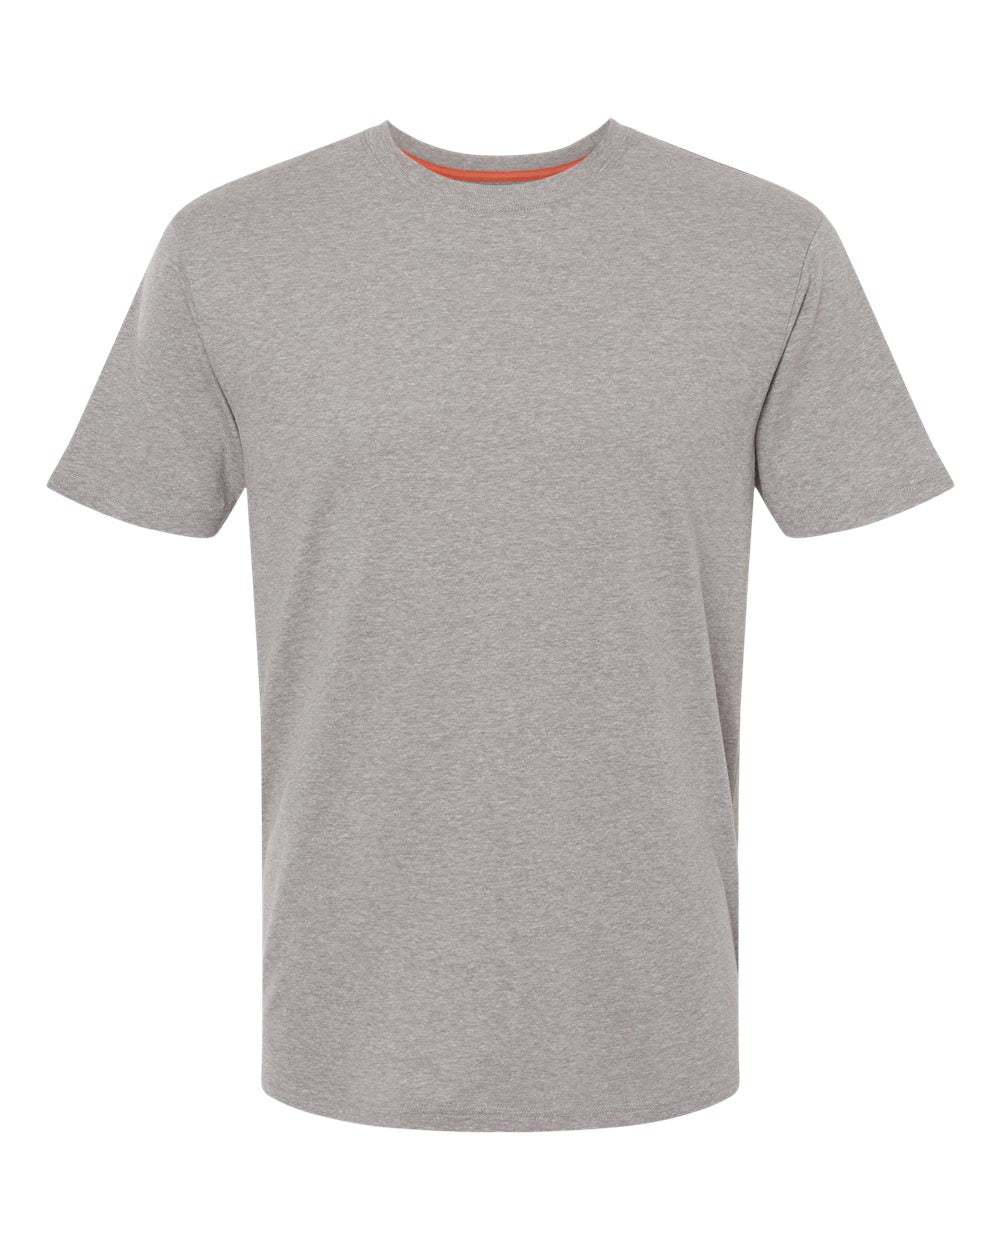 Customizable kastlfel recycledsoft t-shirt in steel grey